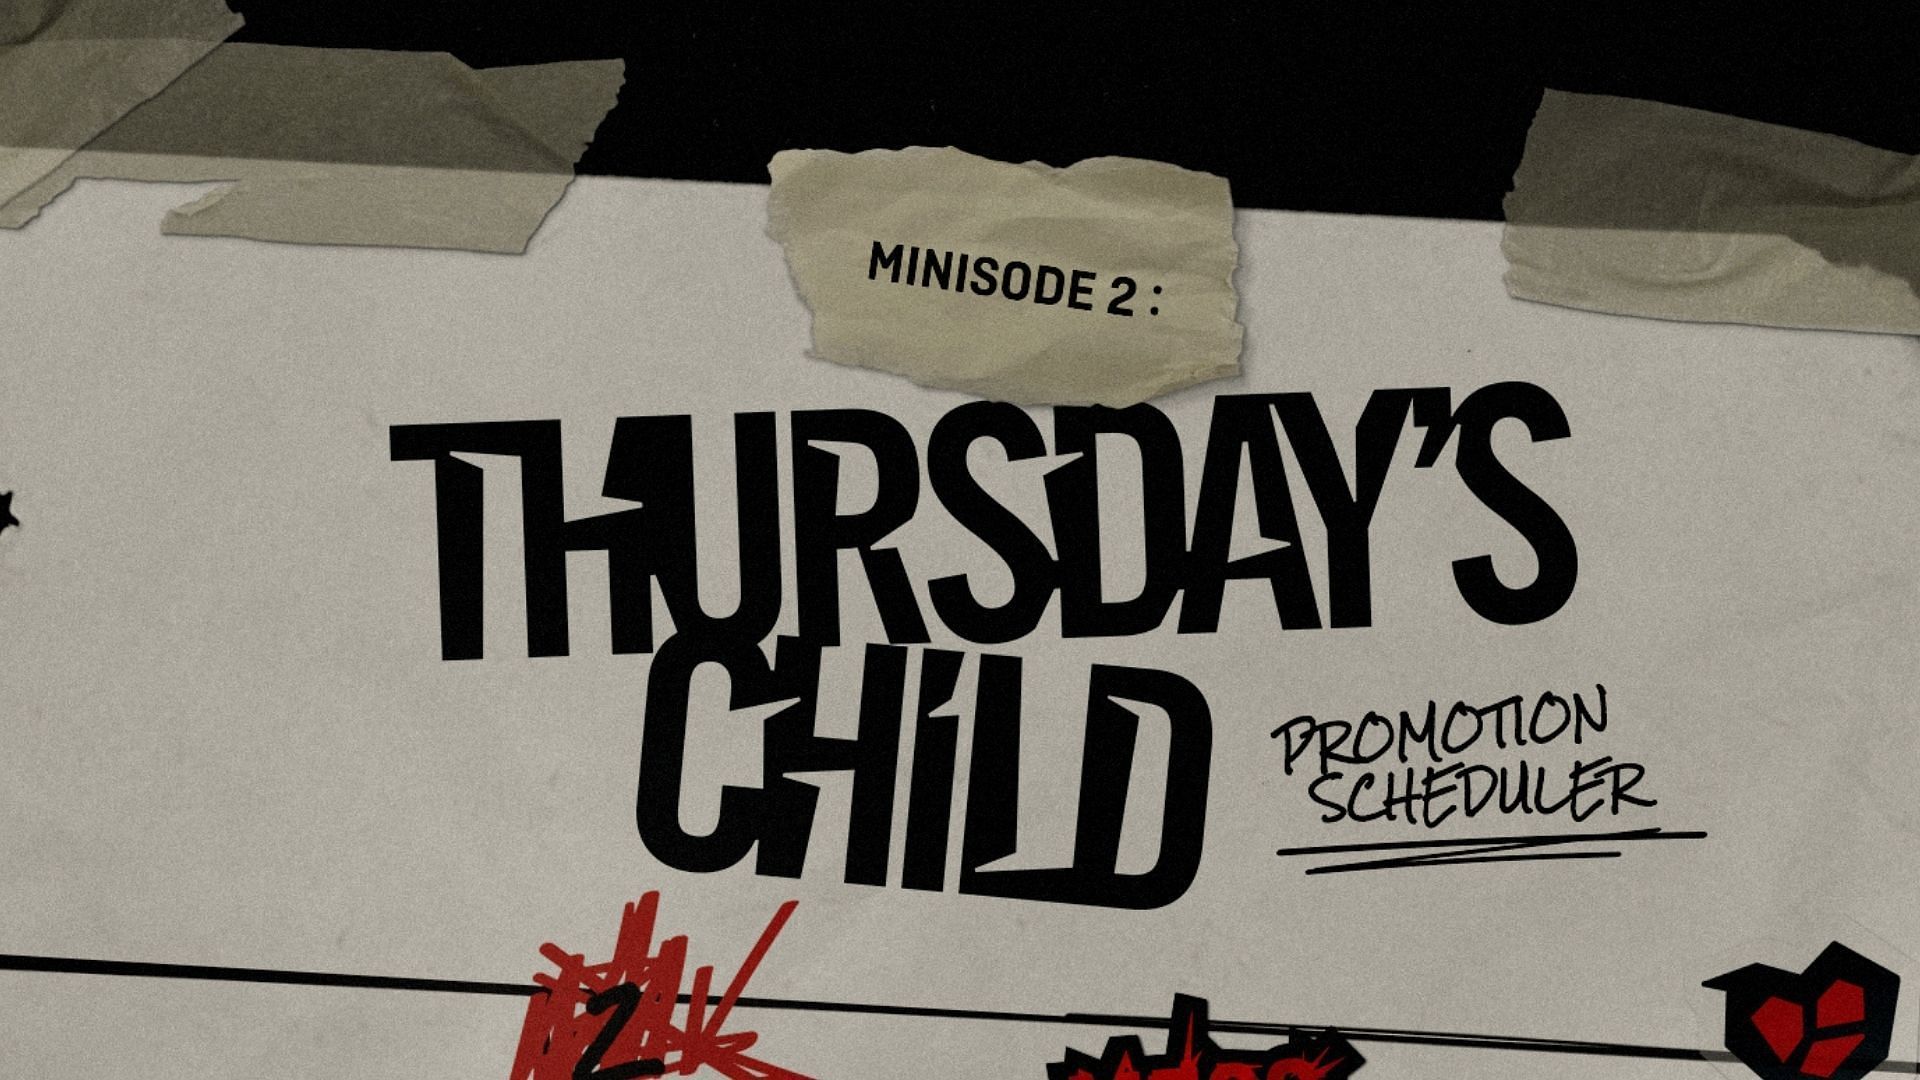 TXT&#039;s minisode 2: Thursday&#039;s Child schedule (Image via @BIGHIT_MUSIC/Twitter)